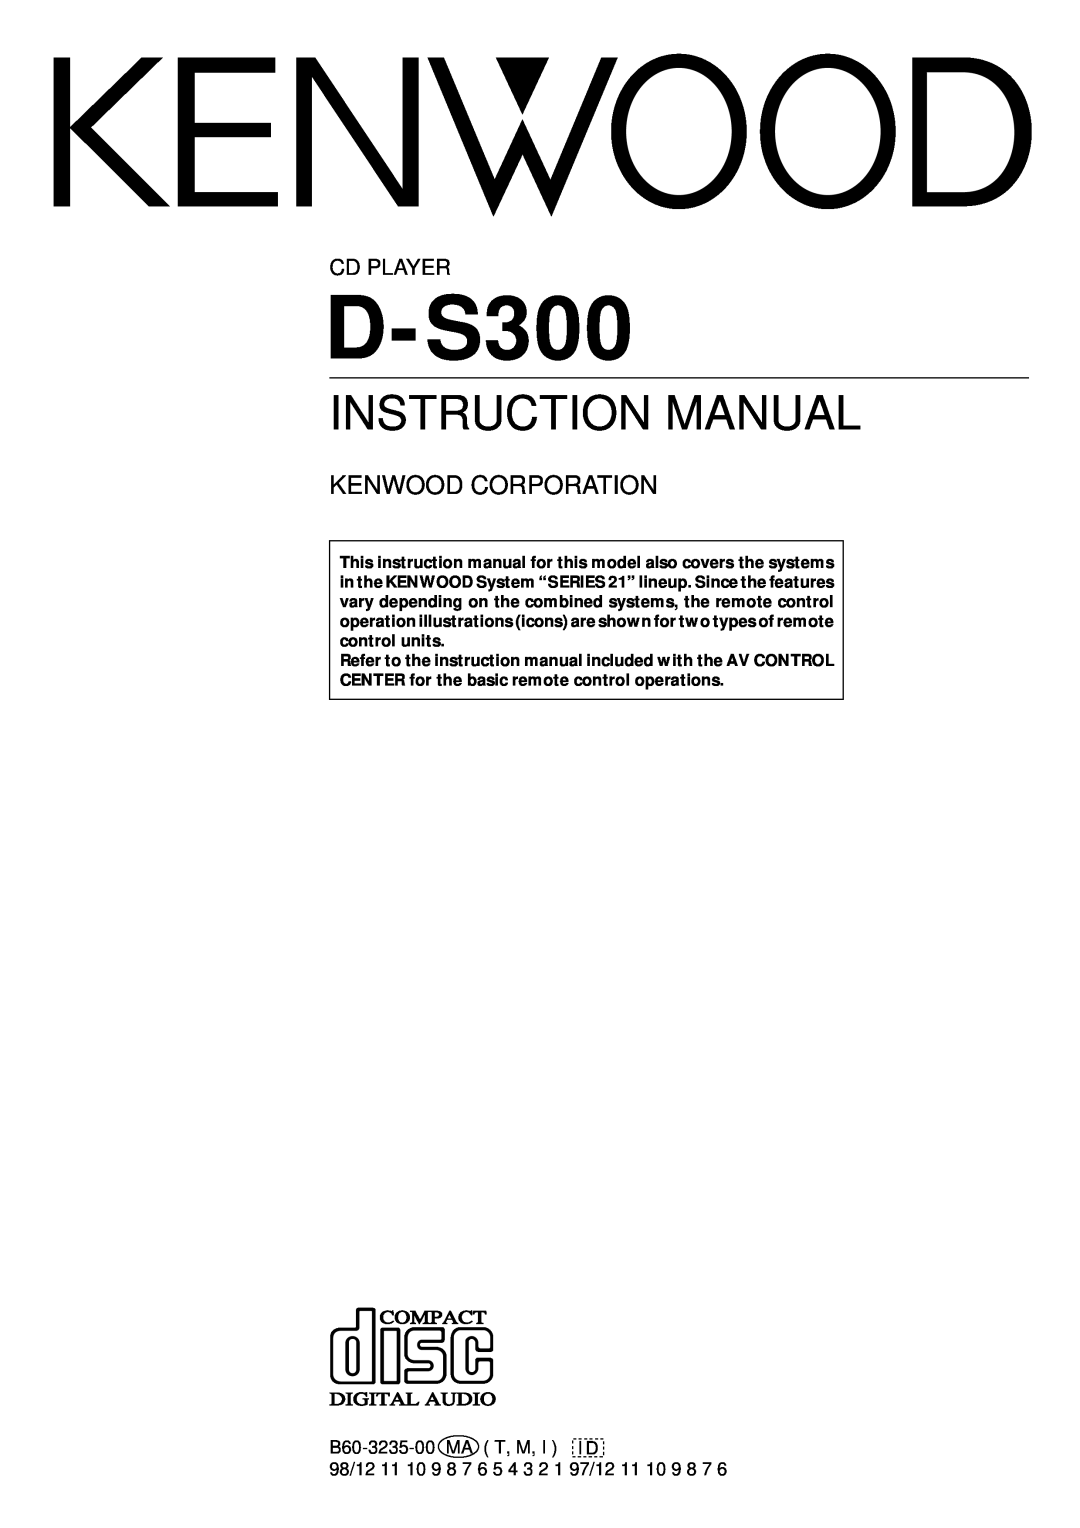 Kenwood D-S300 instruction manual Kenwood Corporation, Cd Player, Compact Digital Audio, B60-3235-00MA T, M, I I D 